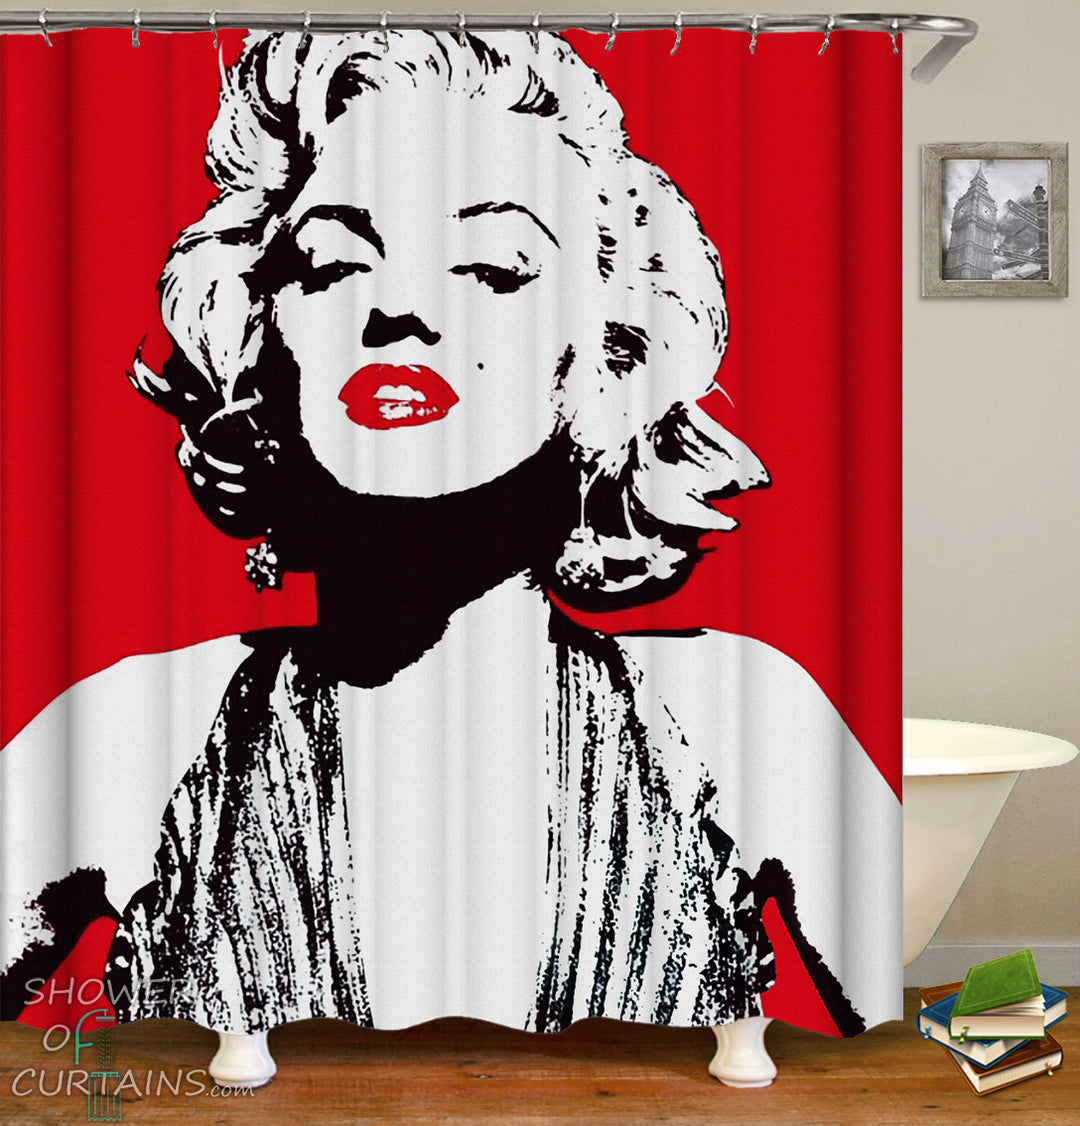 Red And White Marilyn Monroe Shower Curtain - New Marilyn Monroe bathroom Look